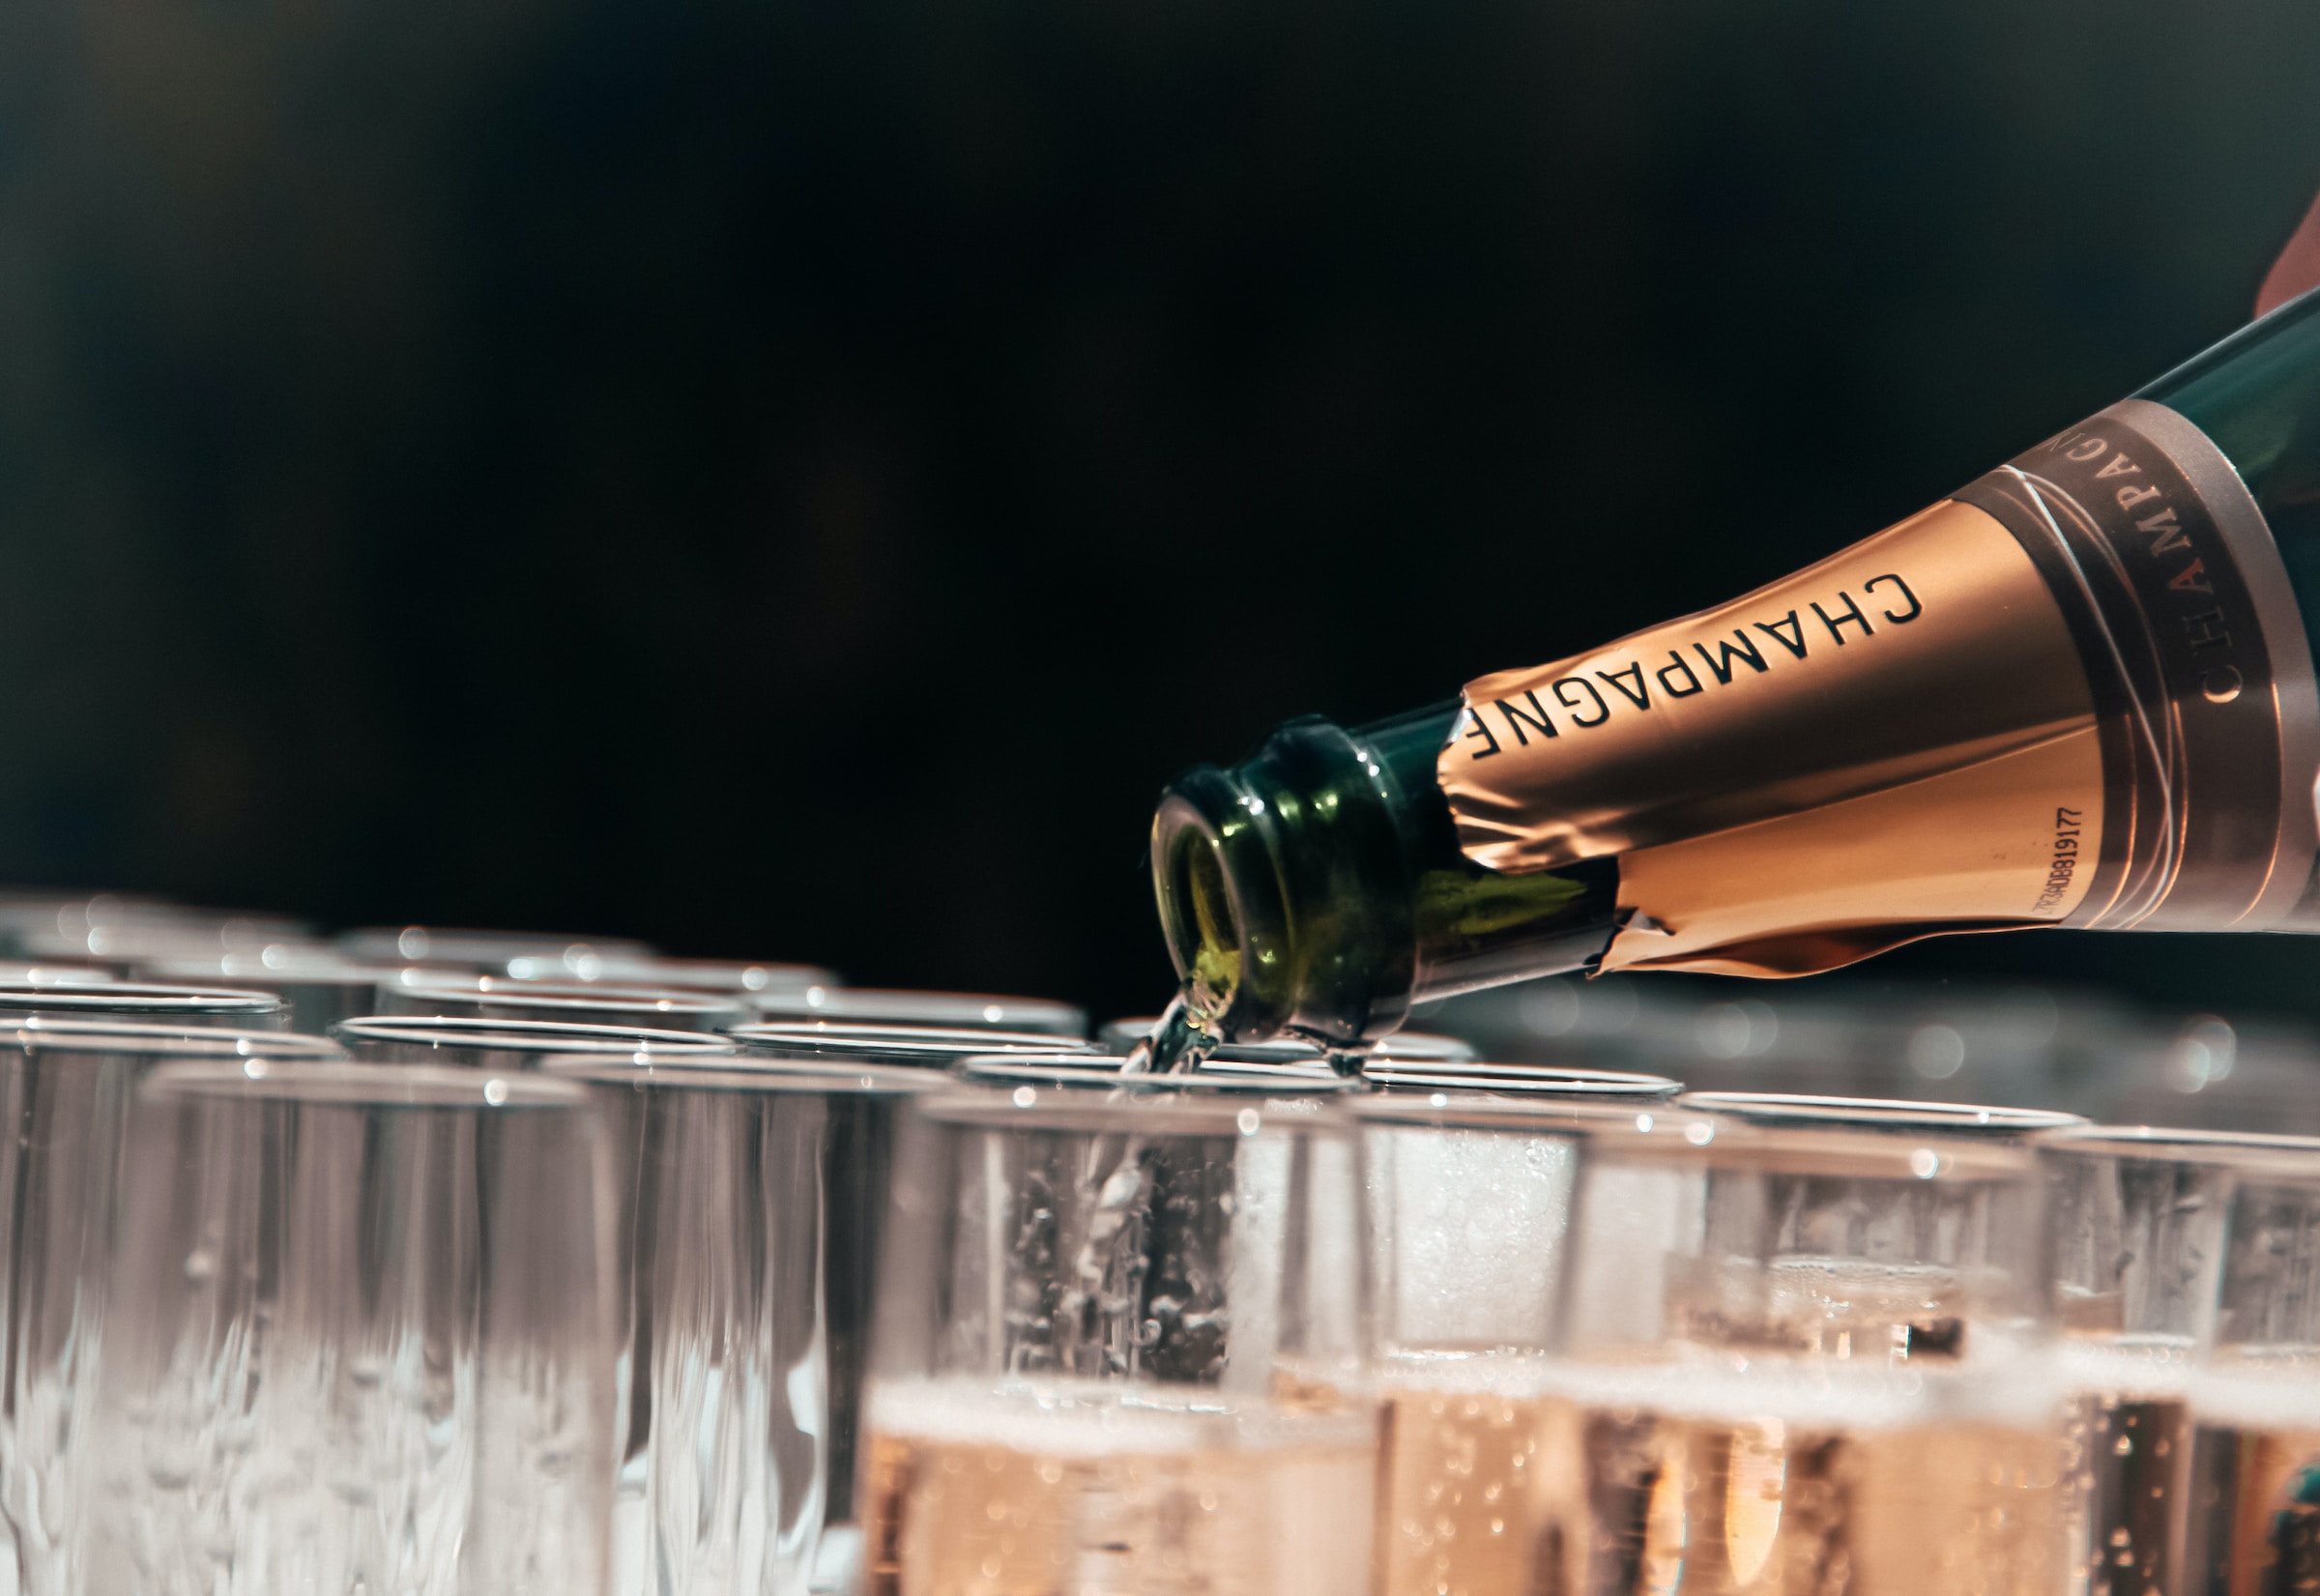 Glasses on champagne | Source: Unsplash